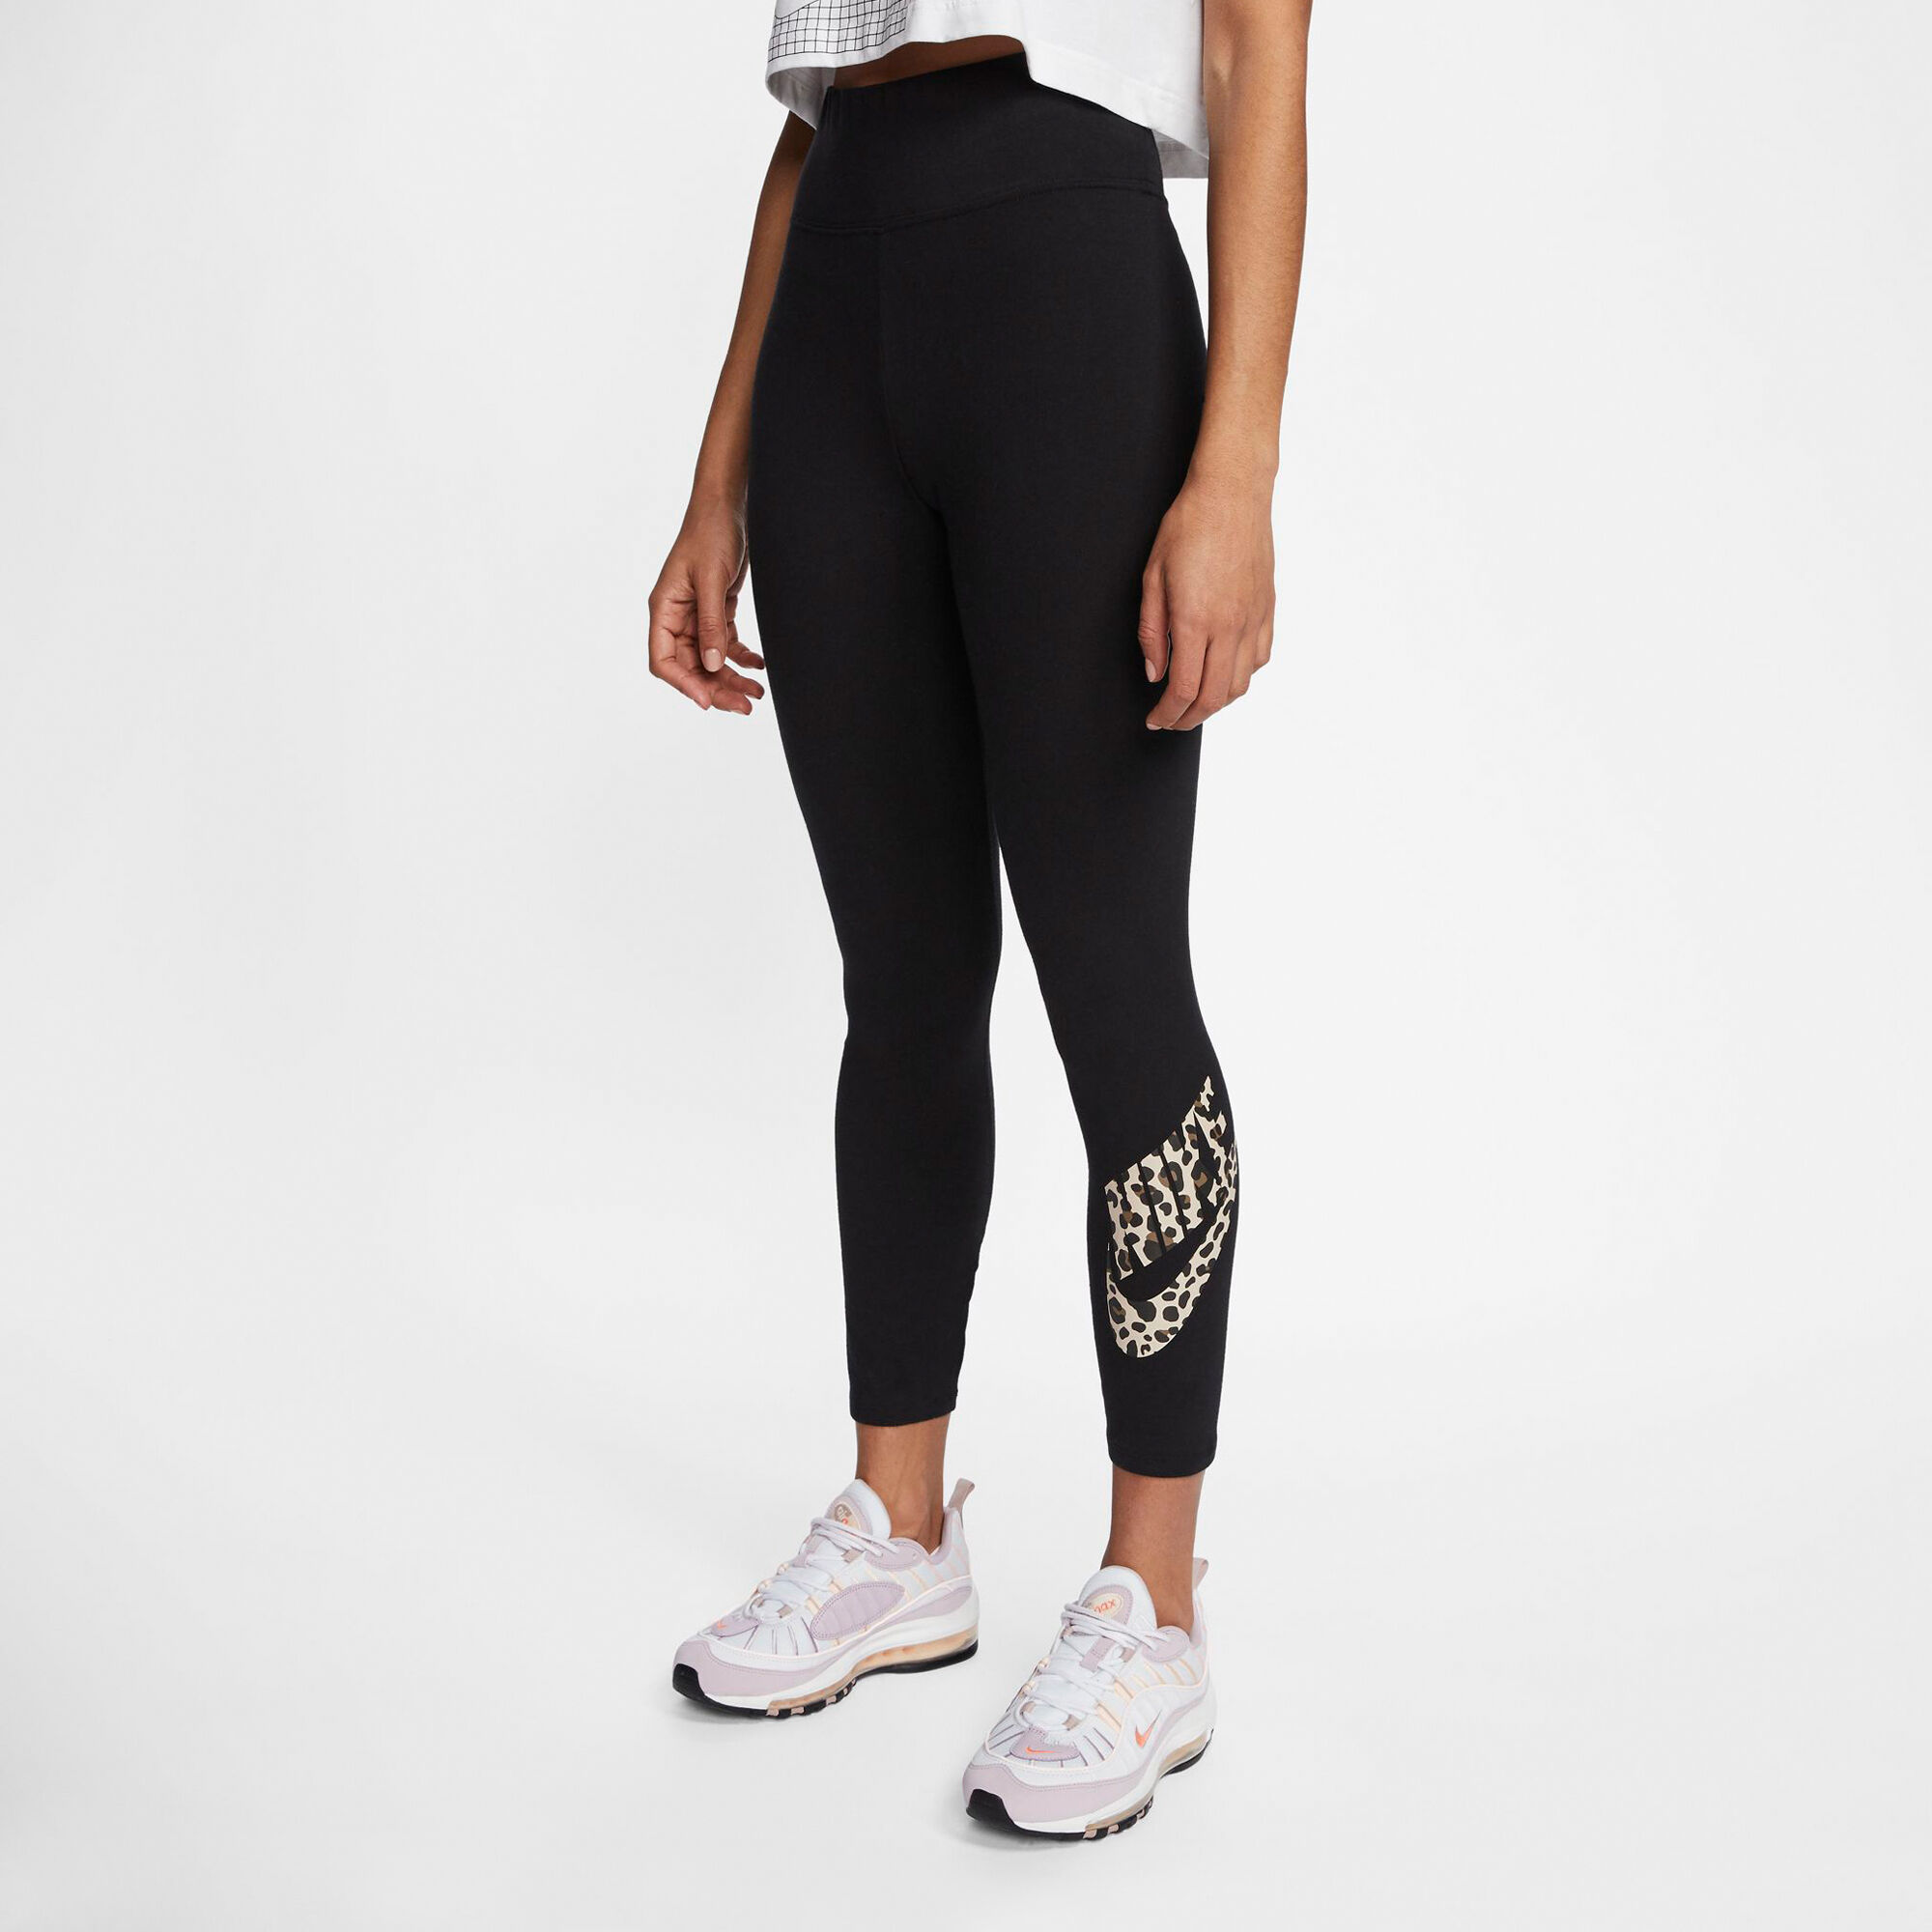 Buy Nike Women's Pro Printed Leggings Black in KSA -SSS